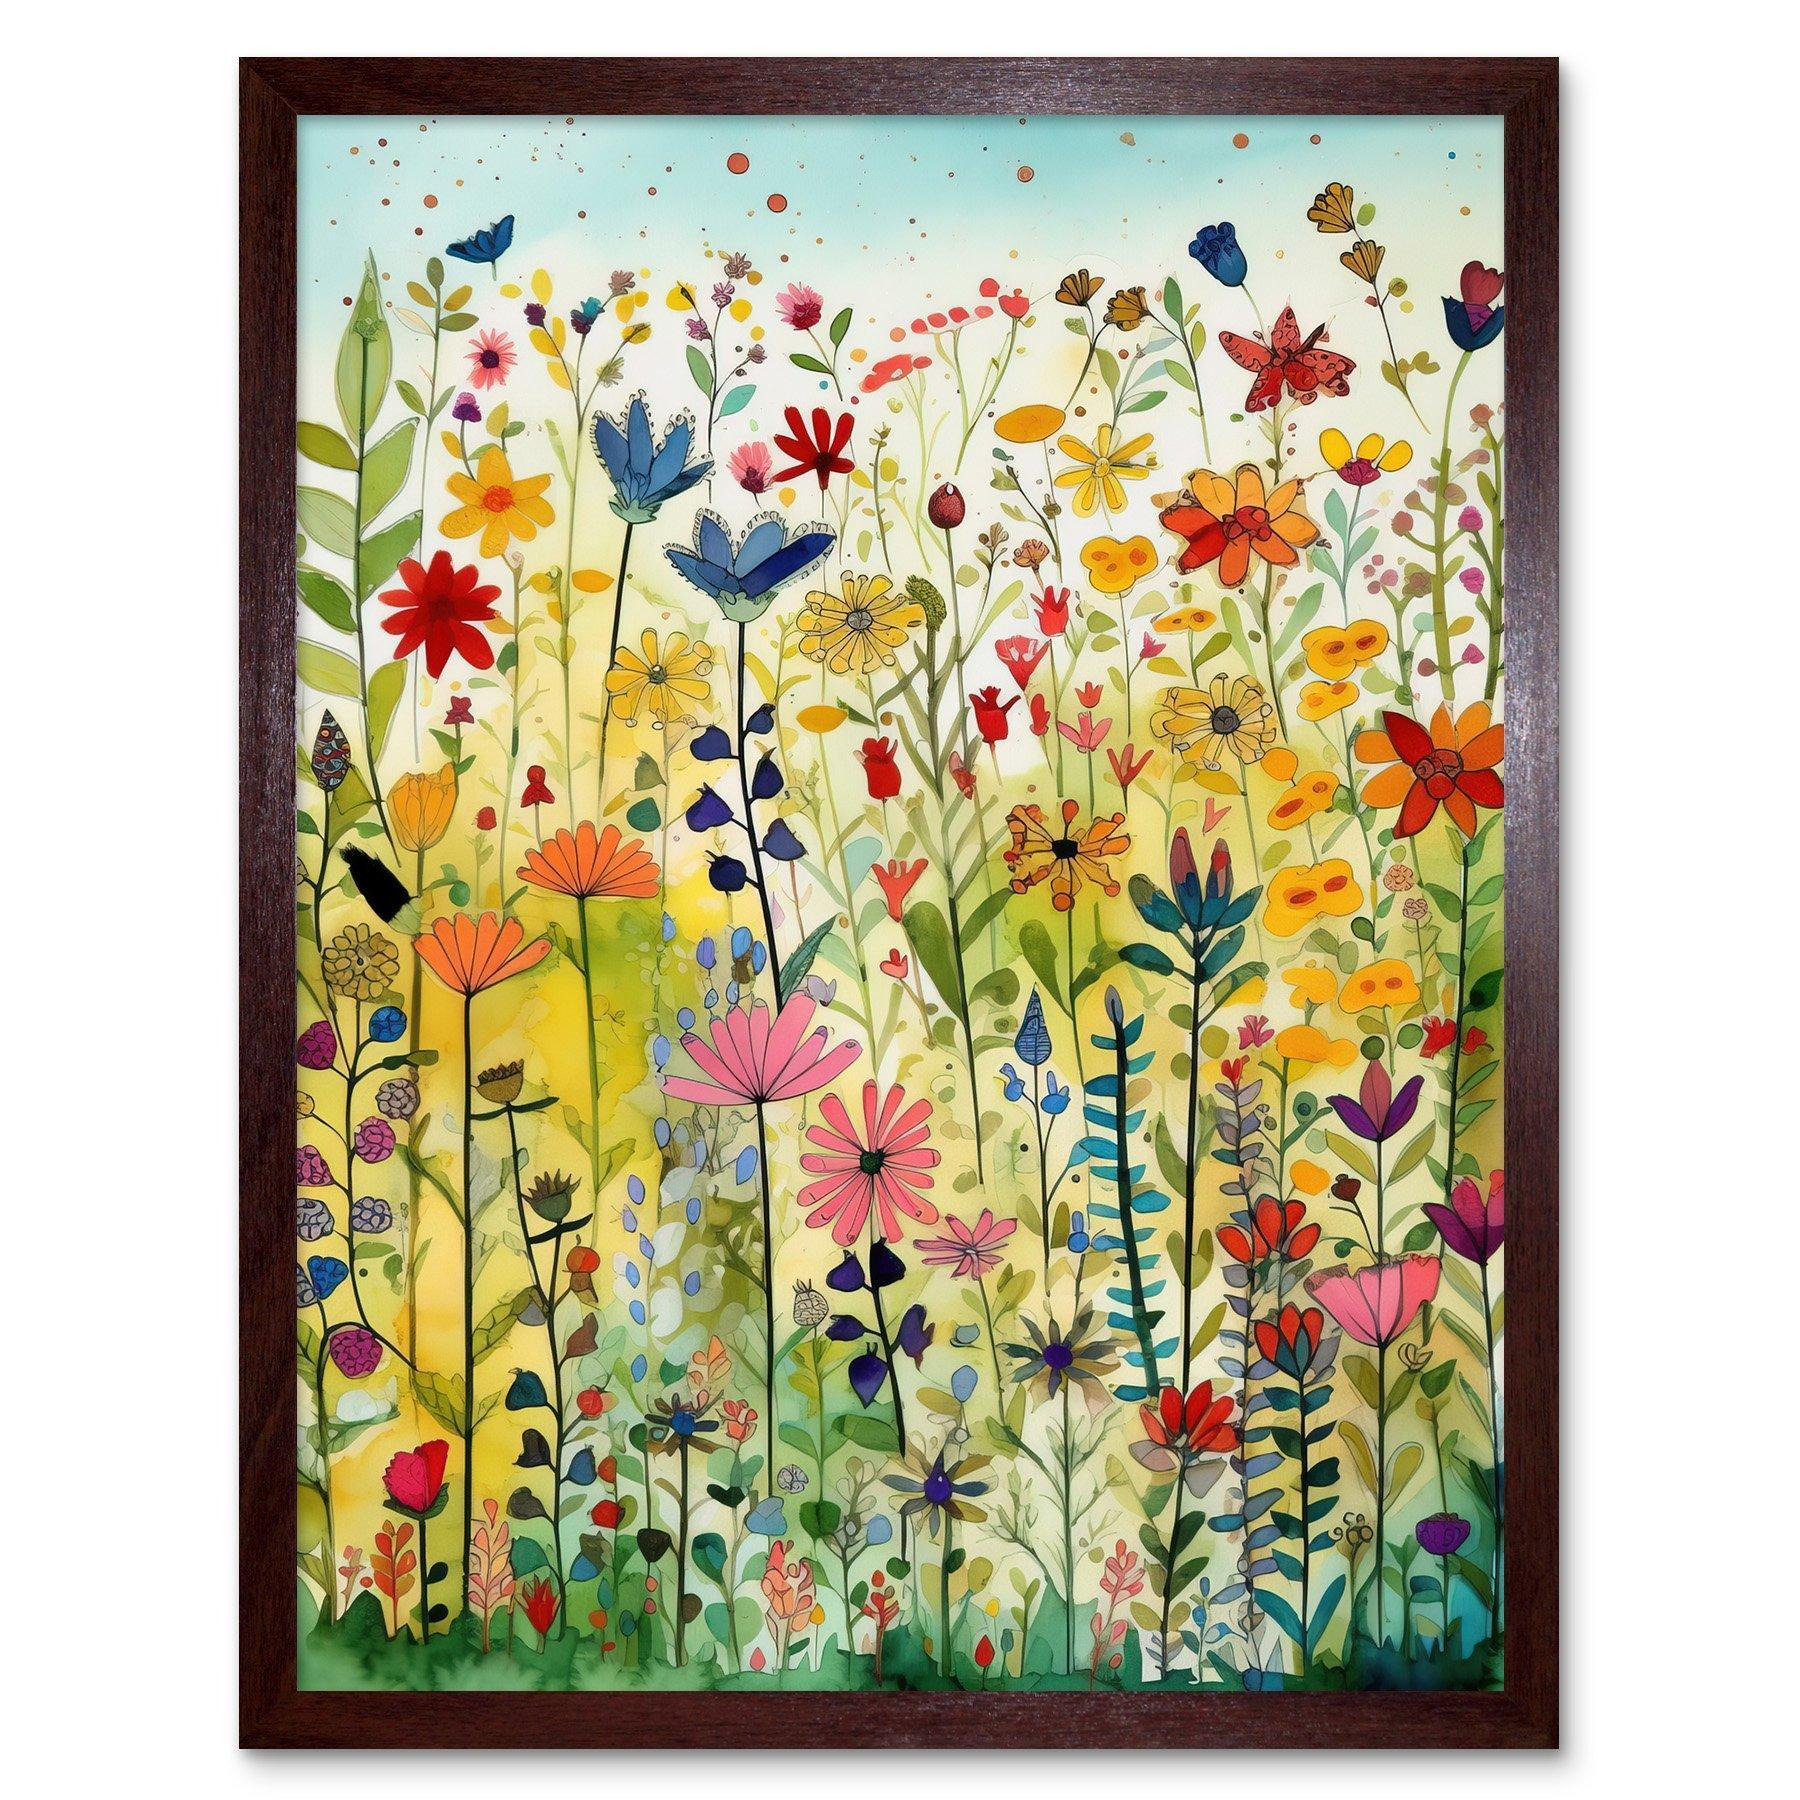 Mixed Wildflower Bloom In Meadow Folk Art Art Print Framed Poster Wall Decor 12x16 inch - image 1